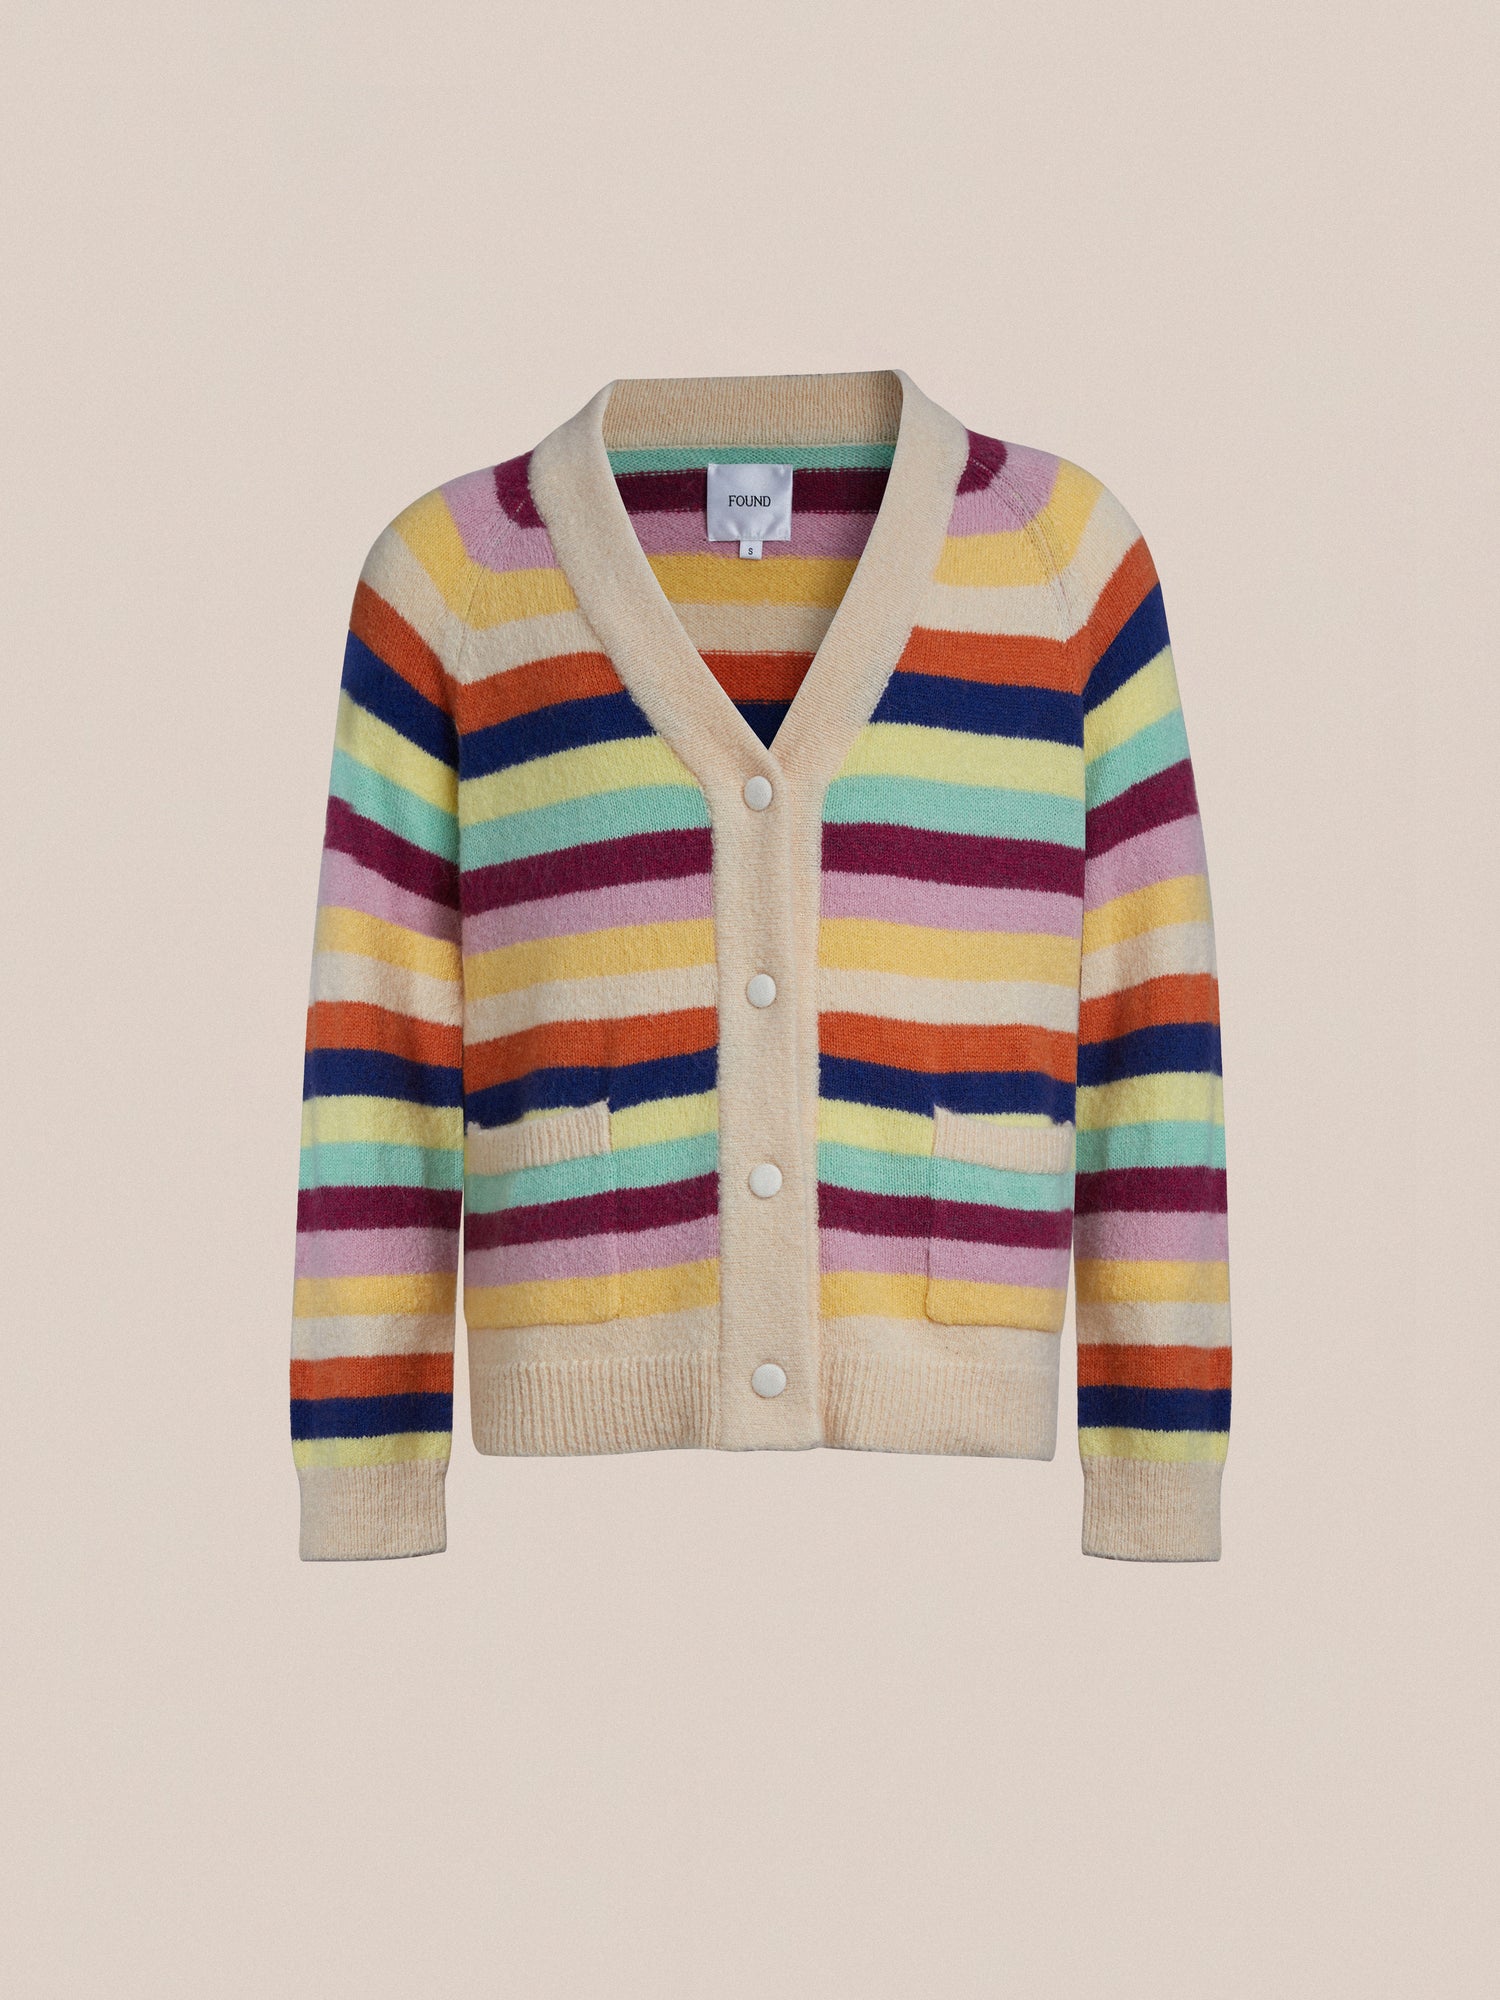 A children's Razi Multi Stripe Cardigan sweater in vibrant hues by Found.